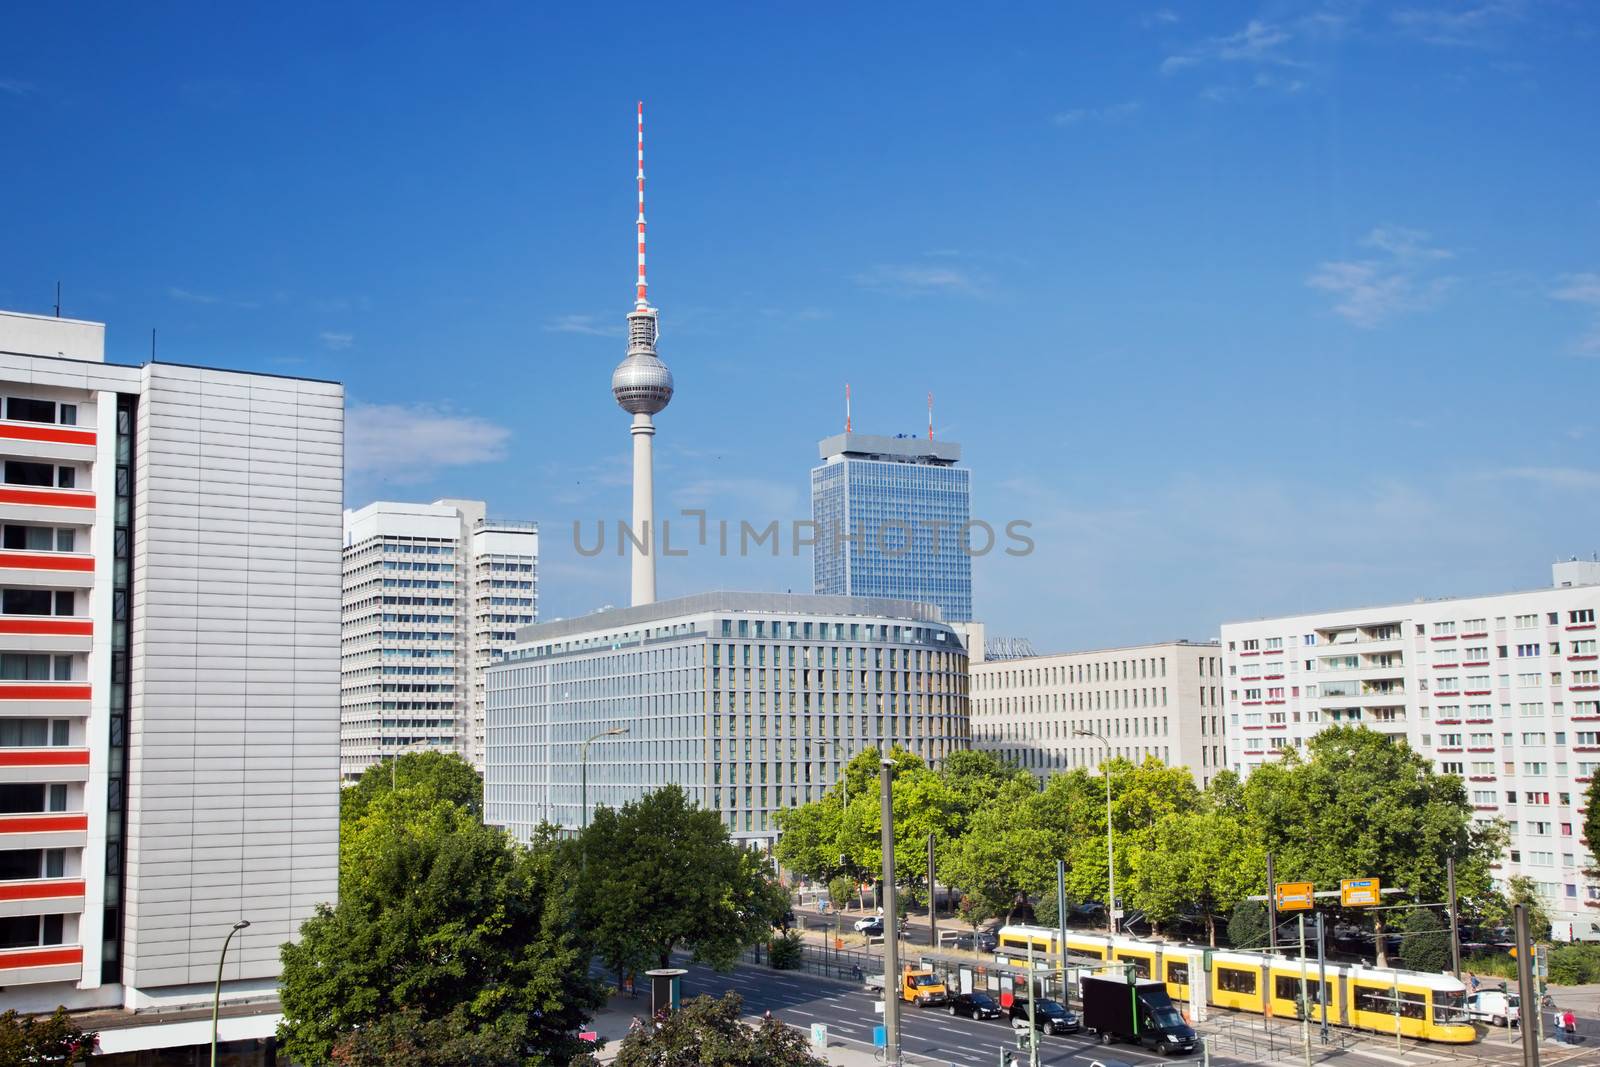 Television tower, German Fernsehturm seen from the eastern part of Berlin near Alexanderplatz.